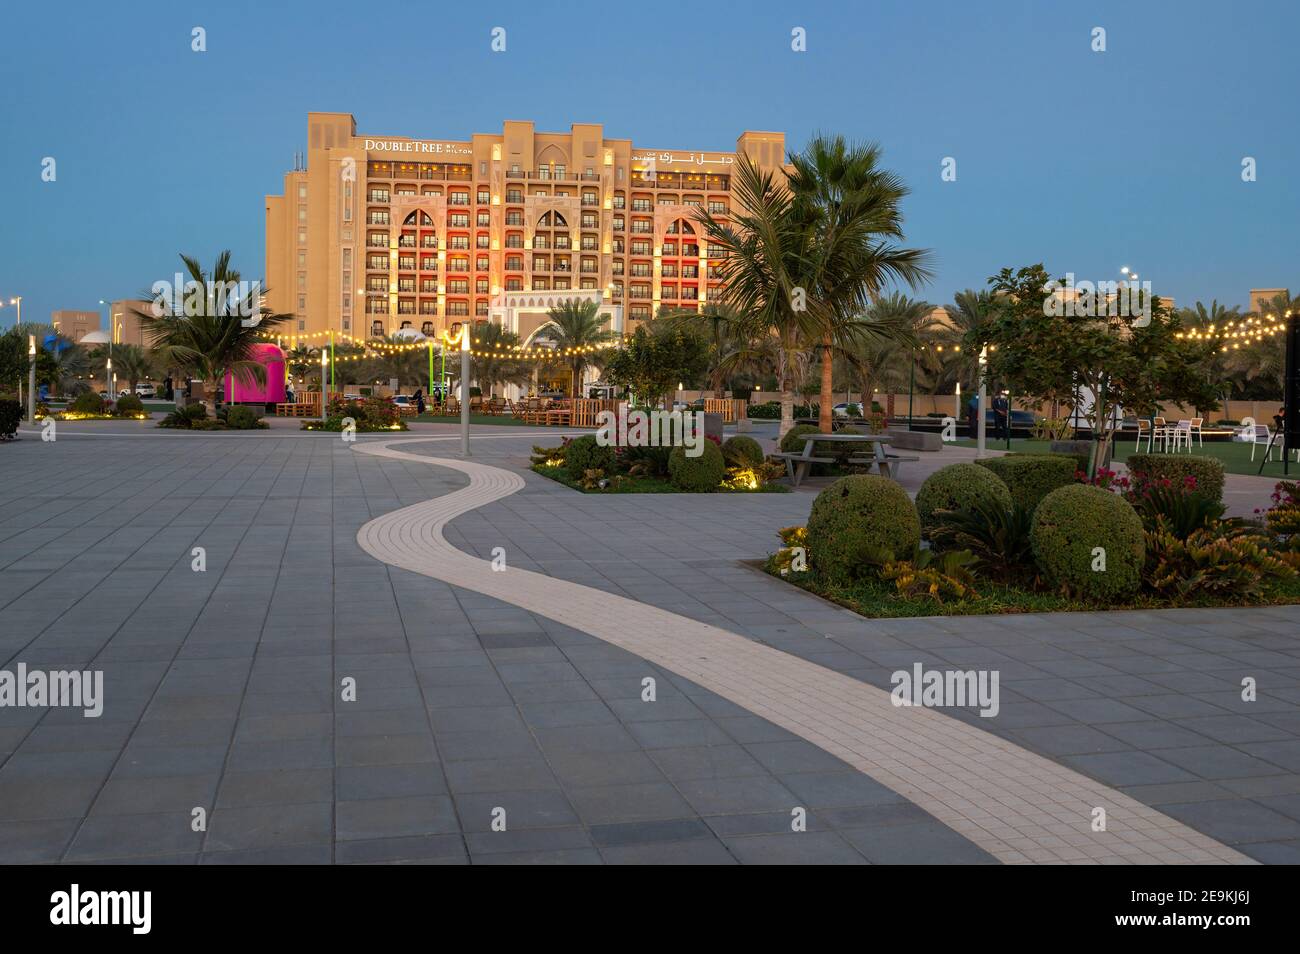 Ras al Khaimah, United Arab Emirates - February 3, 2020: Marjan Island in emirate of Ras al Khaimah in the United Arab Emirates with lots of hotels an Stock Photo